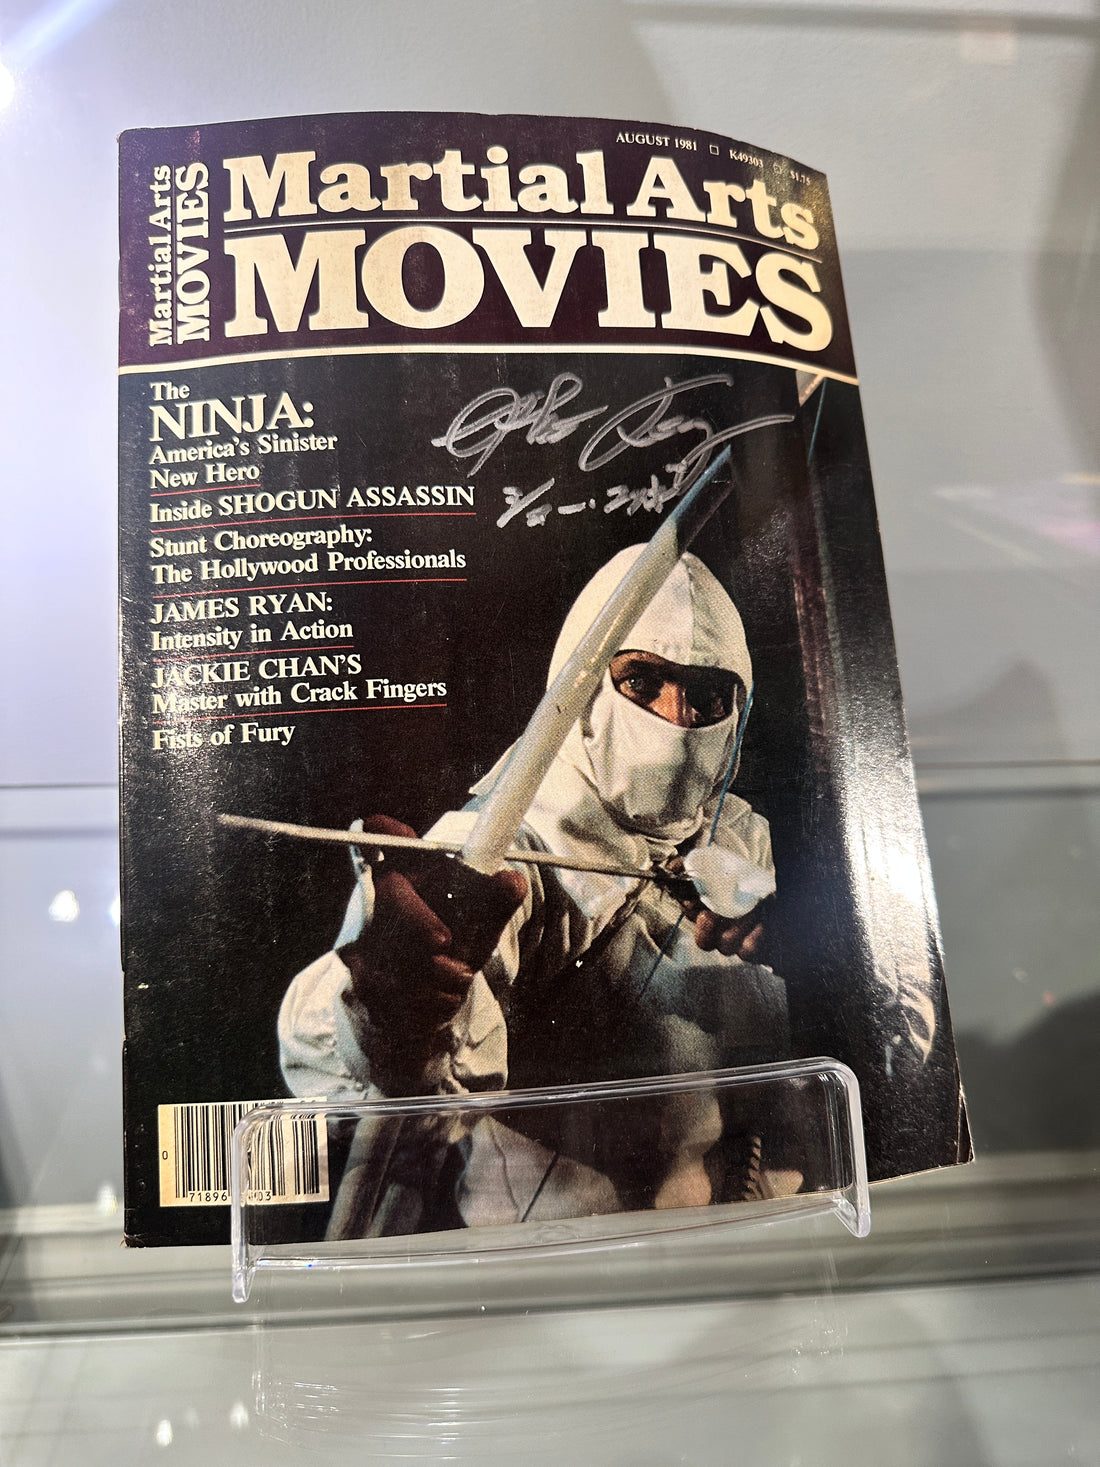 Sho Kosugi Autographed "Martial Arts Movies" August 1981 VG